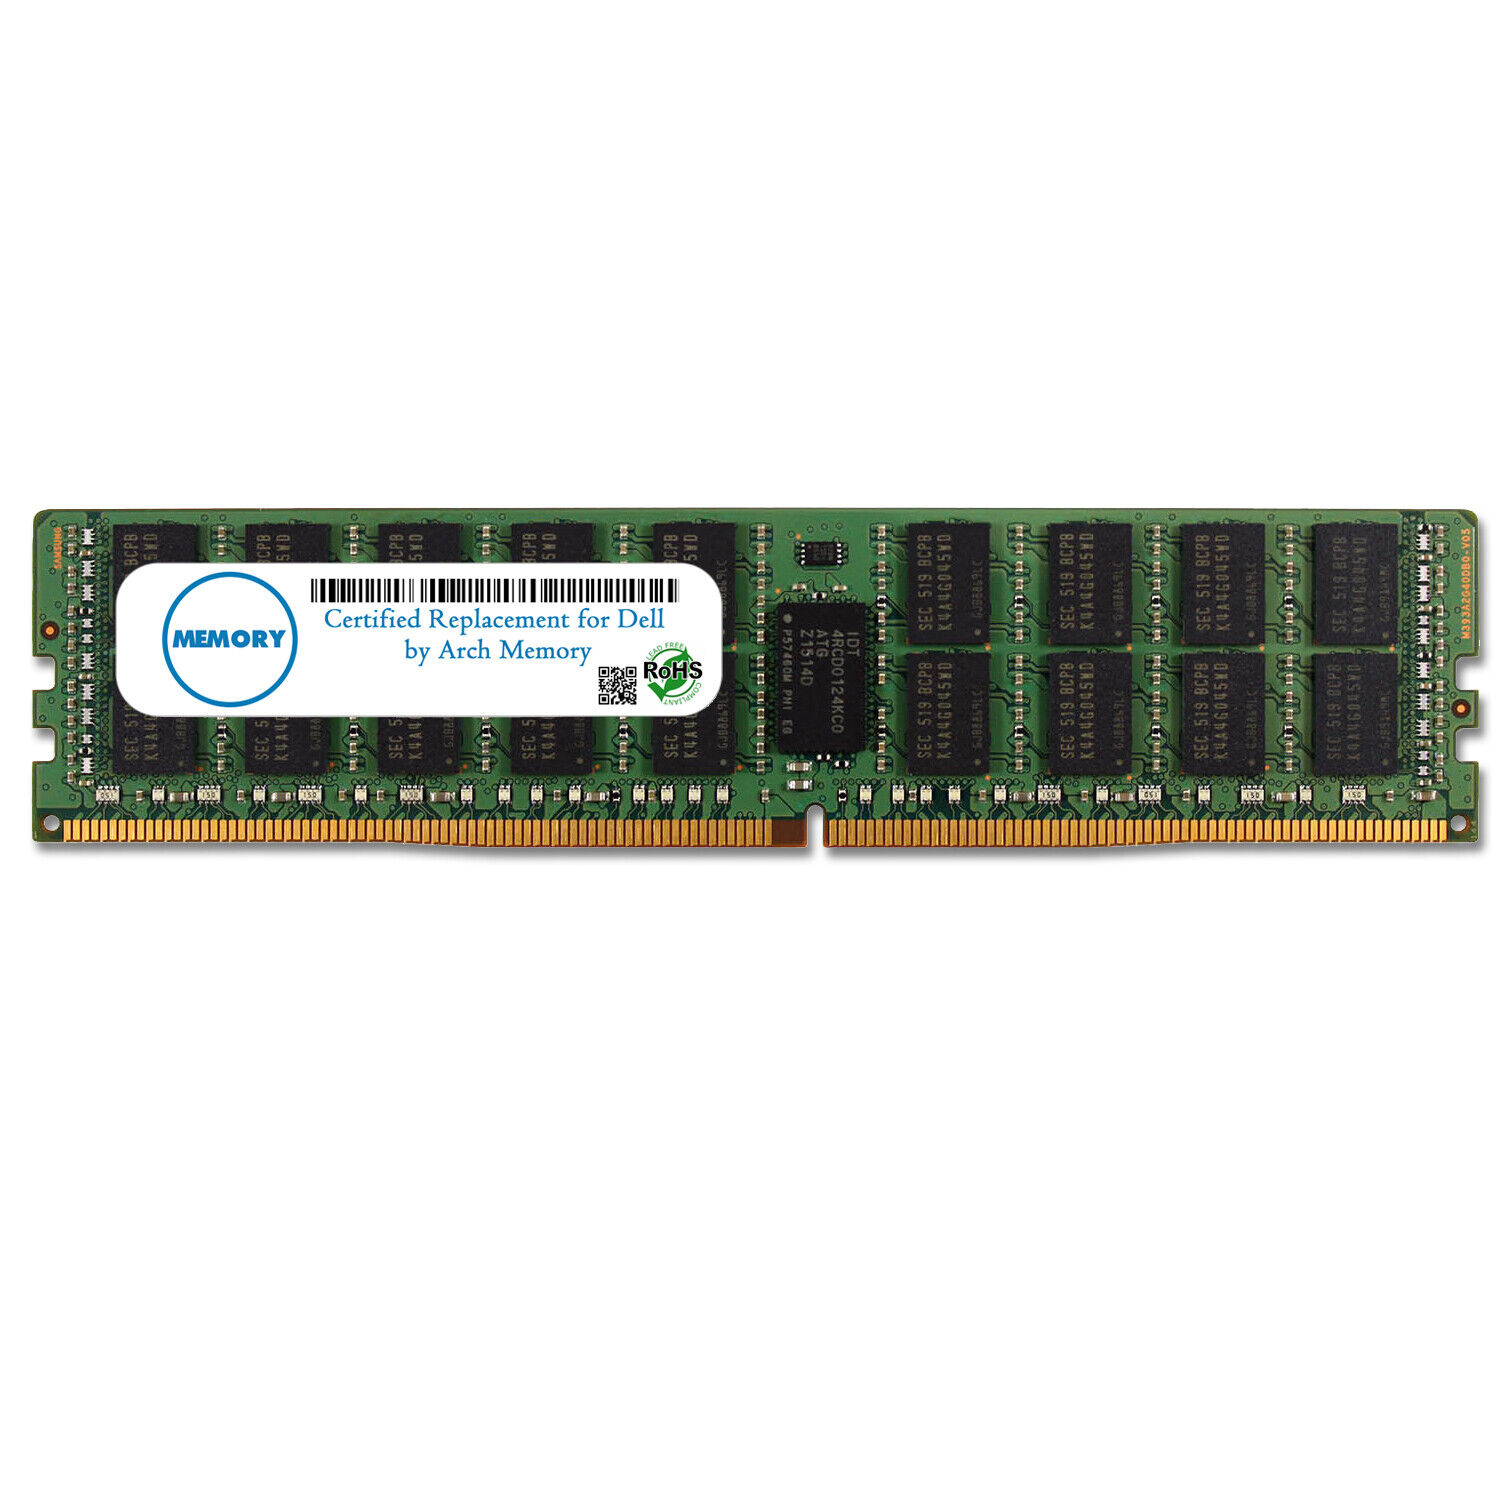 16GB SNP1R8CRC/16G A7945660 PC4-17000 DDR4 ECC RDIMM Server RAM Memory for Dell